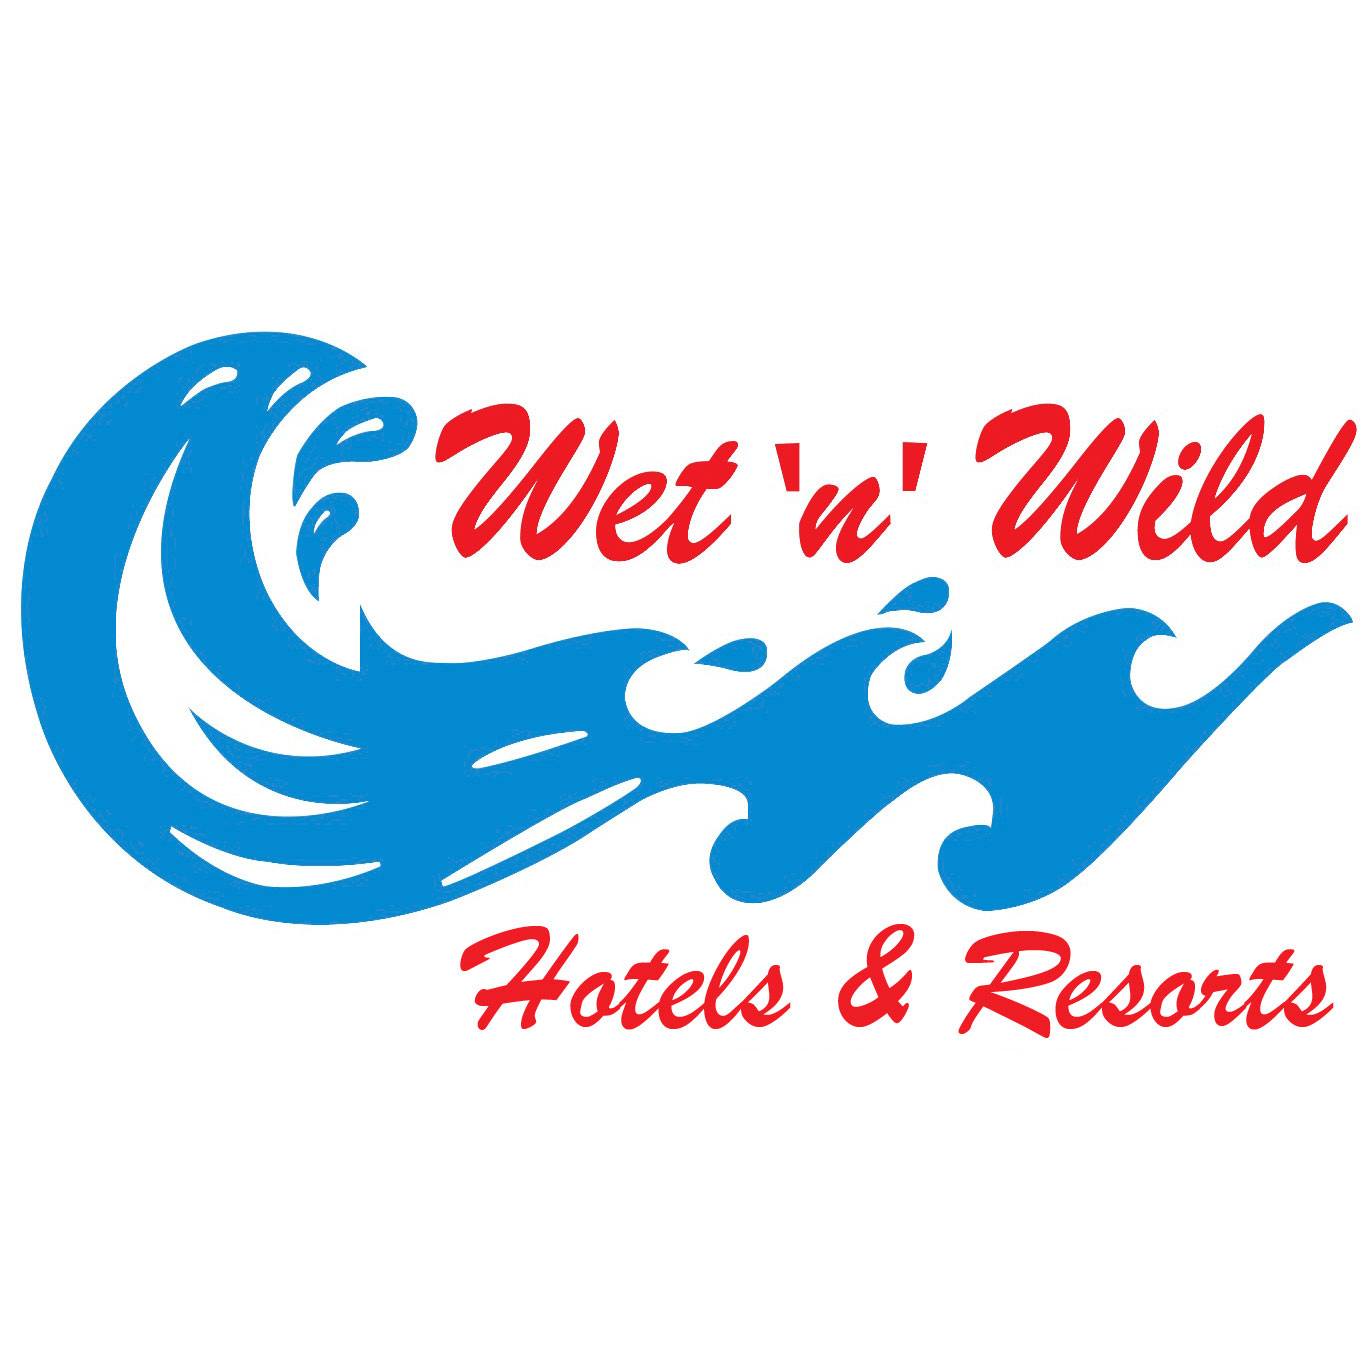 Wet n Wild hotels and resort